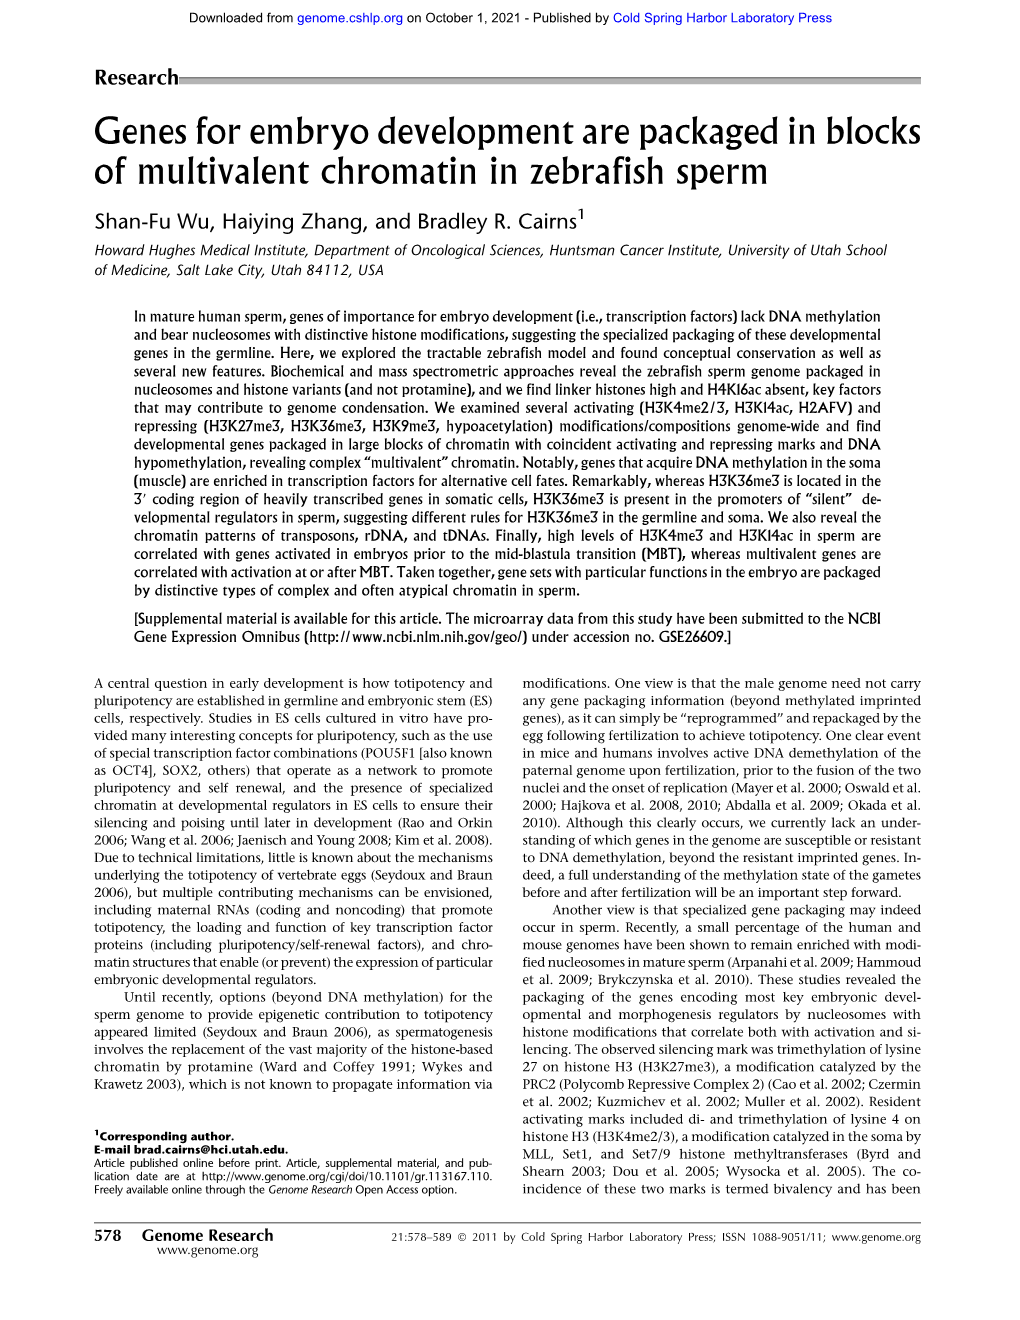 Genes for Embryo Development Are Packaged in Blocks of Multivalent Chromatin in Zebrafish Sperm